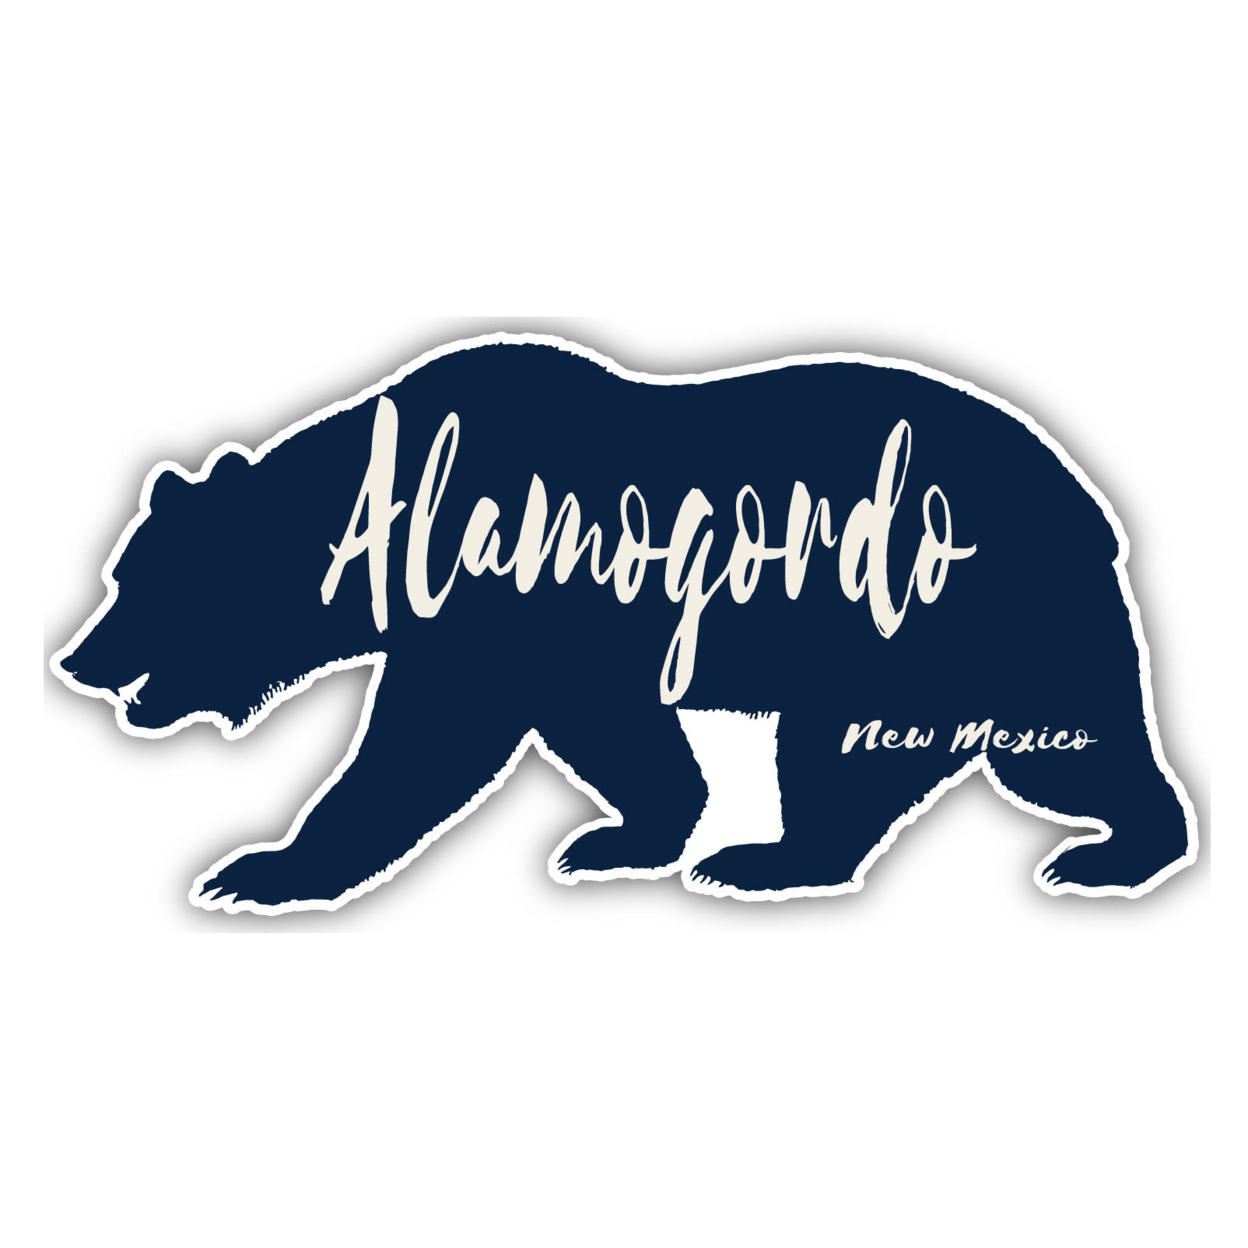 Alamogordo New Mexico Souvenir Decorative Stickers (Choose Theme And Size) - 4-Pack, 6-Inch, Bear